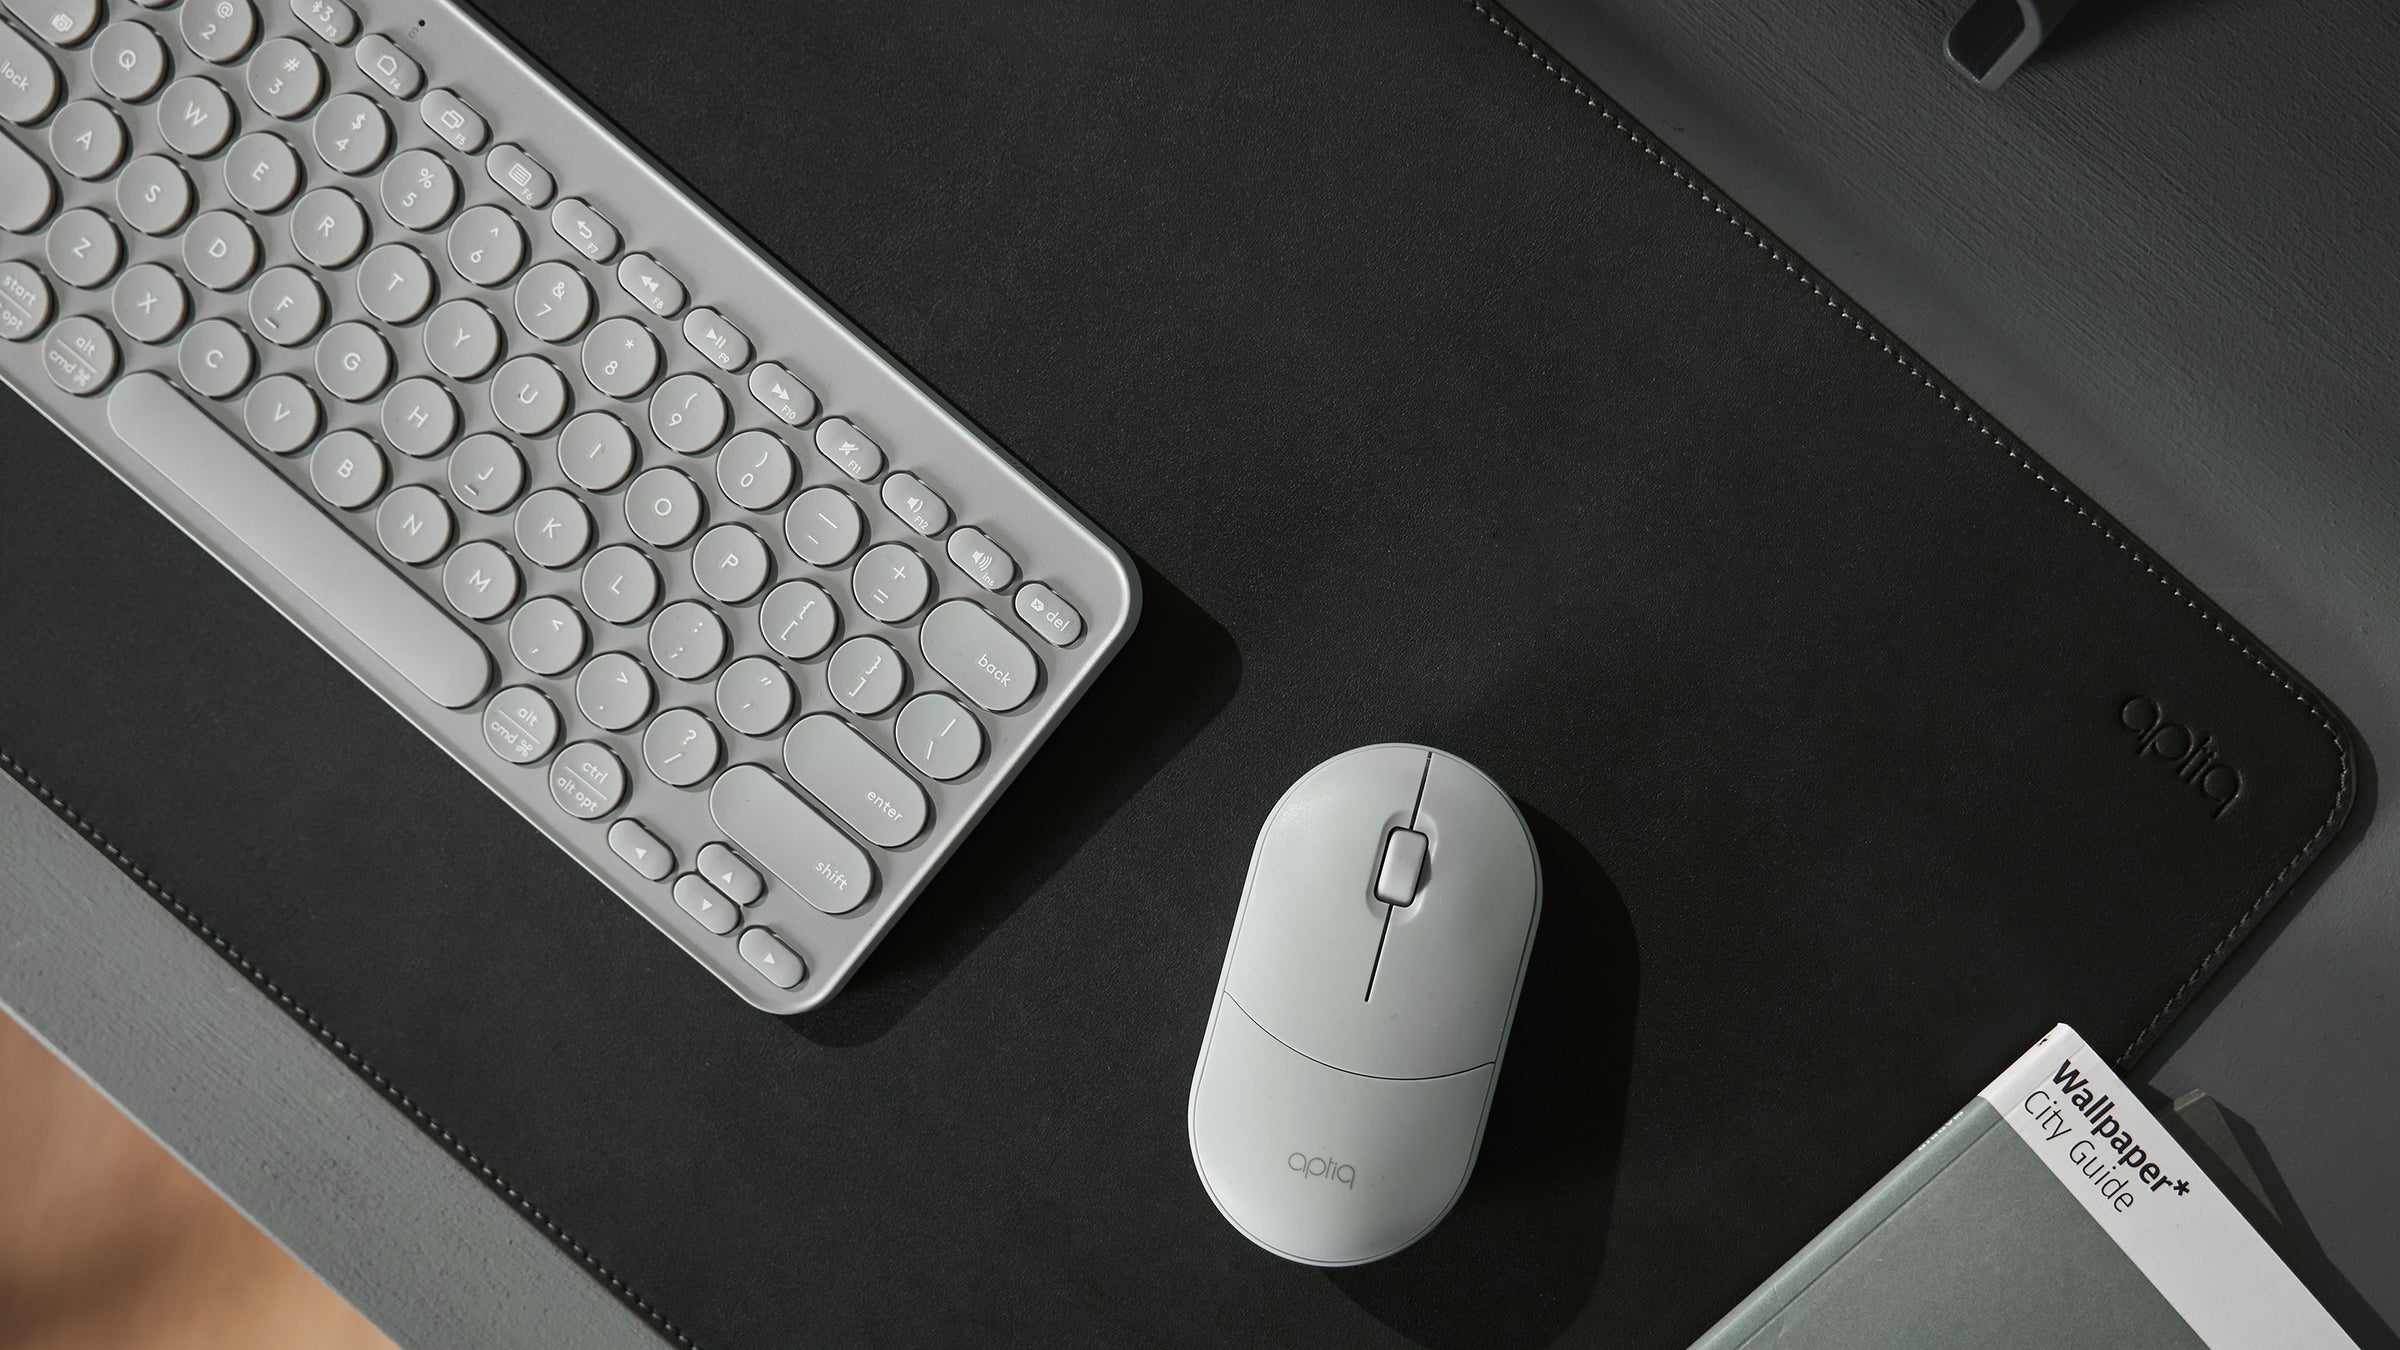 Aptiq keyboard mouse green